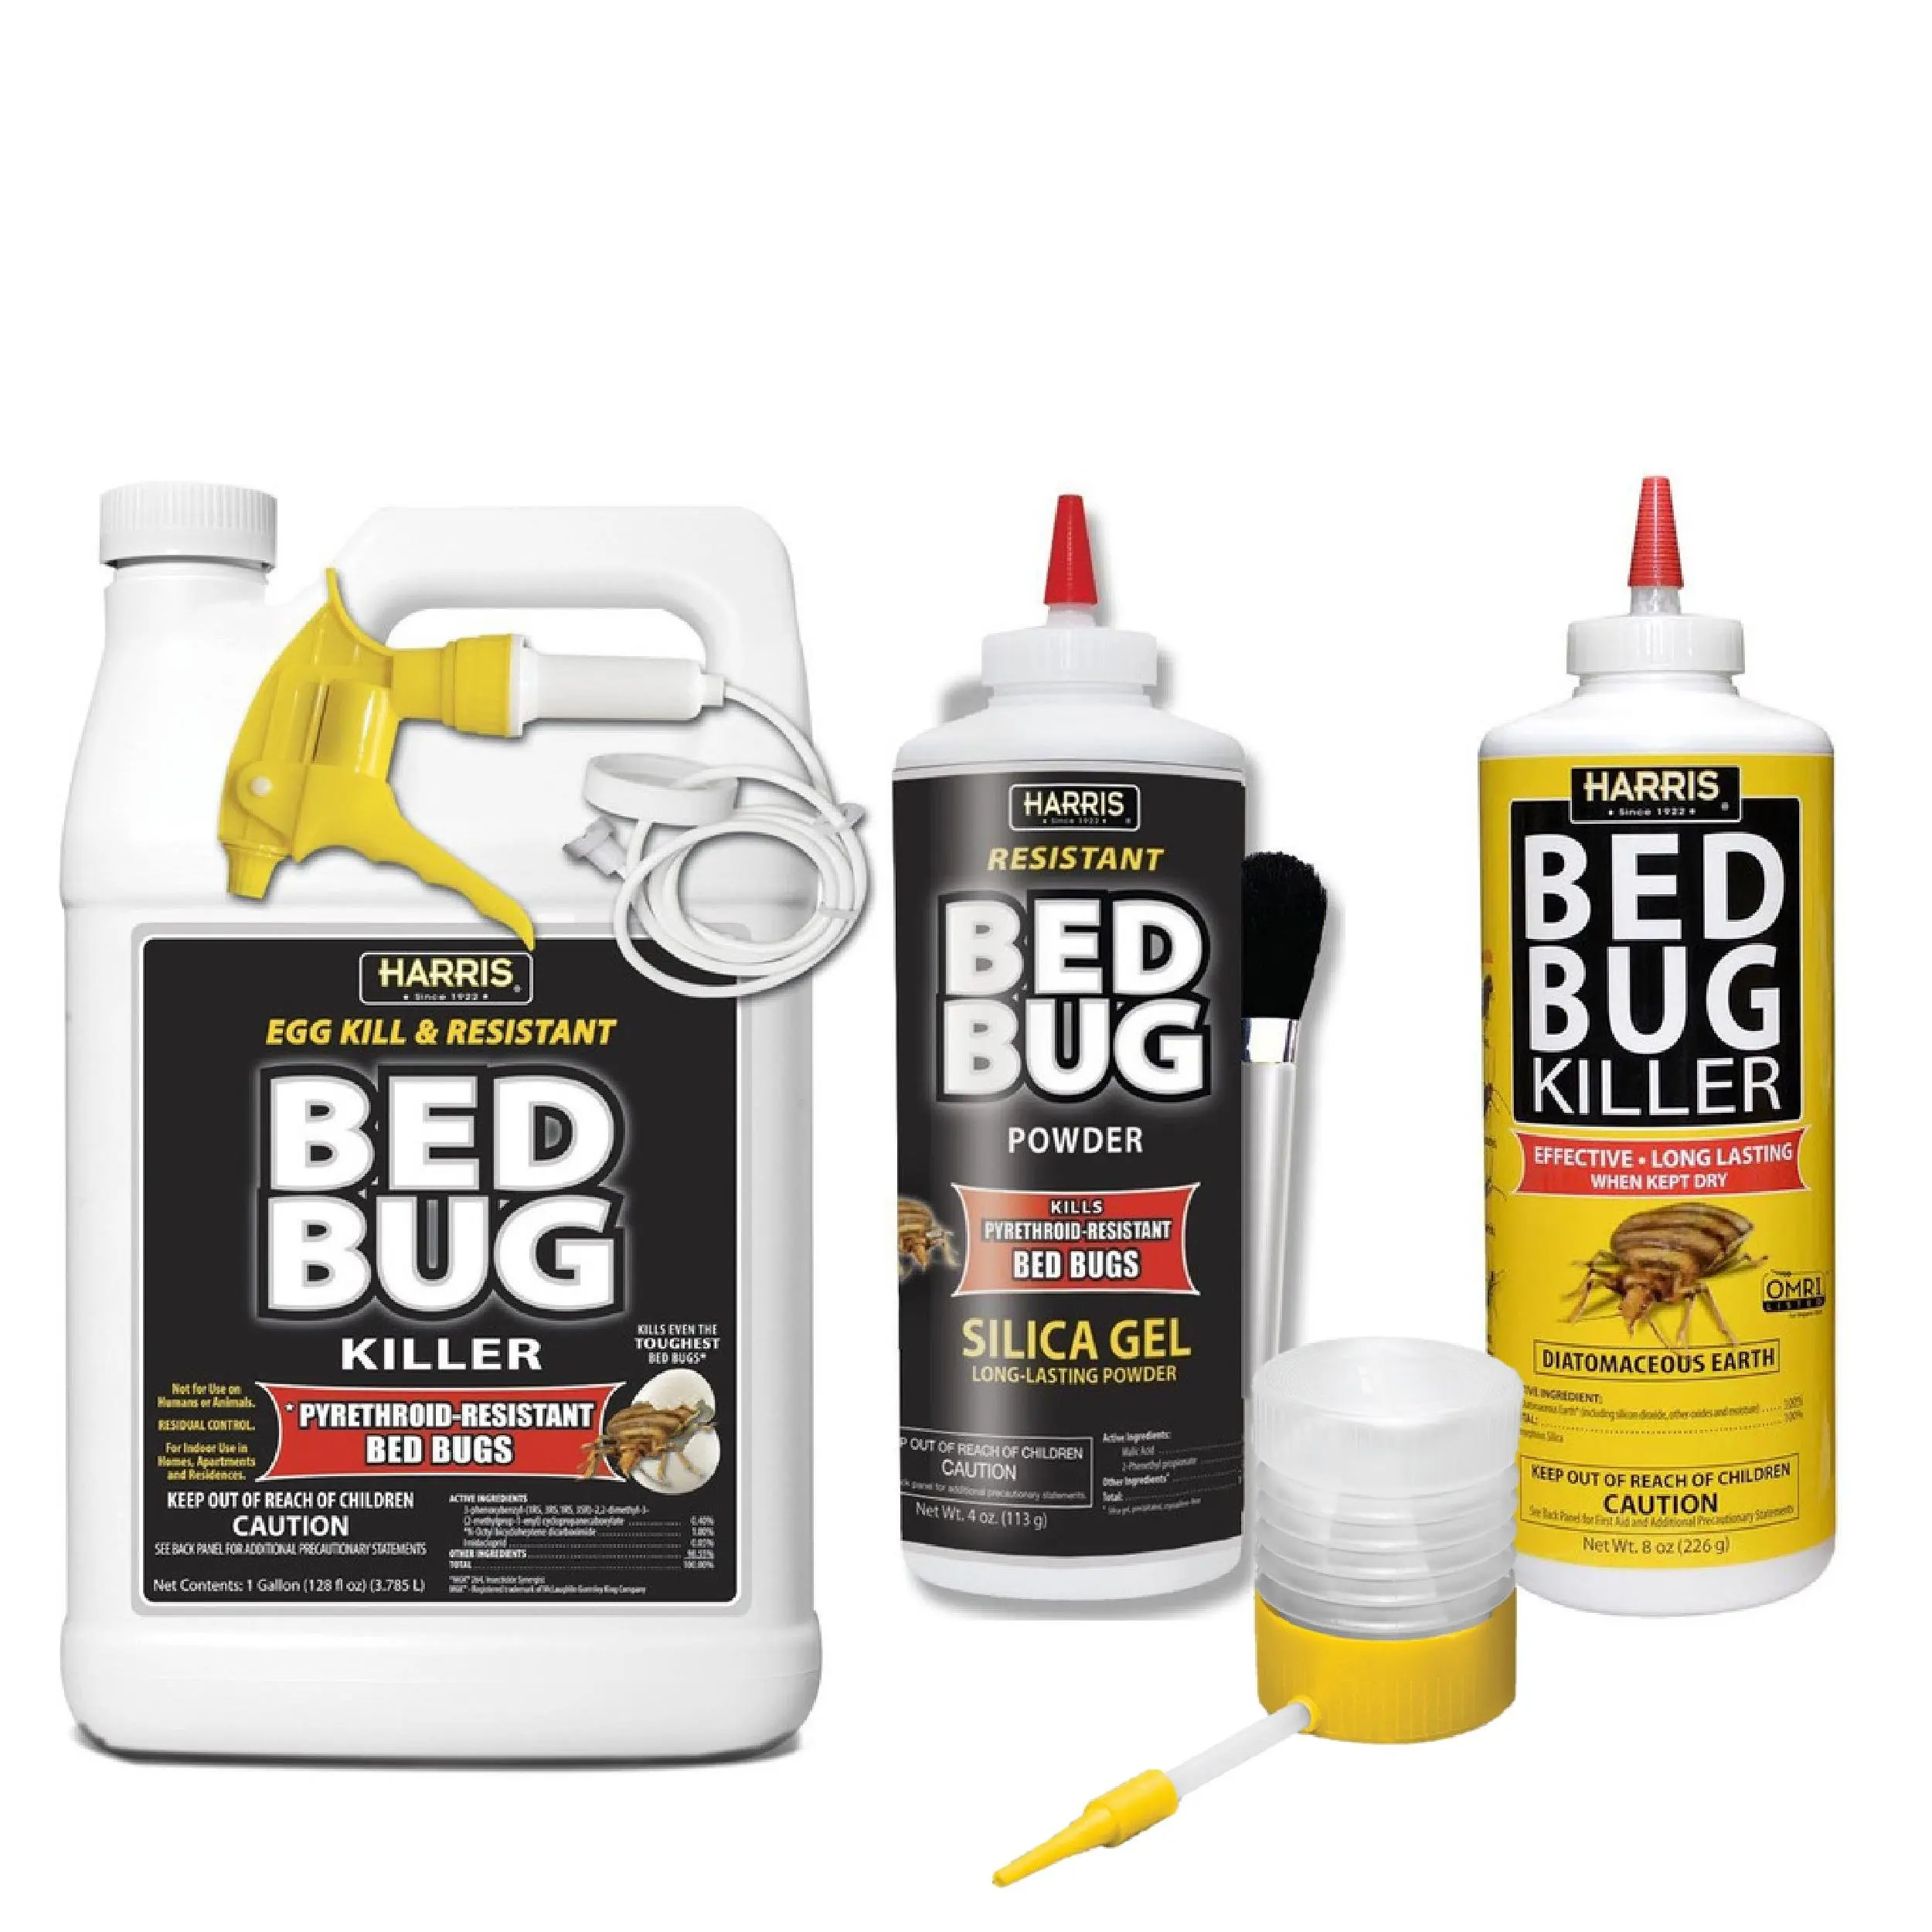 Bug killer. Harris Diatomaceous Earth Bed Bug Killer. Bugs Killer порошок. Бед бугс. Bedbugs Kill.